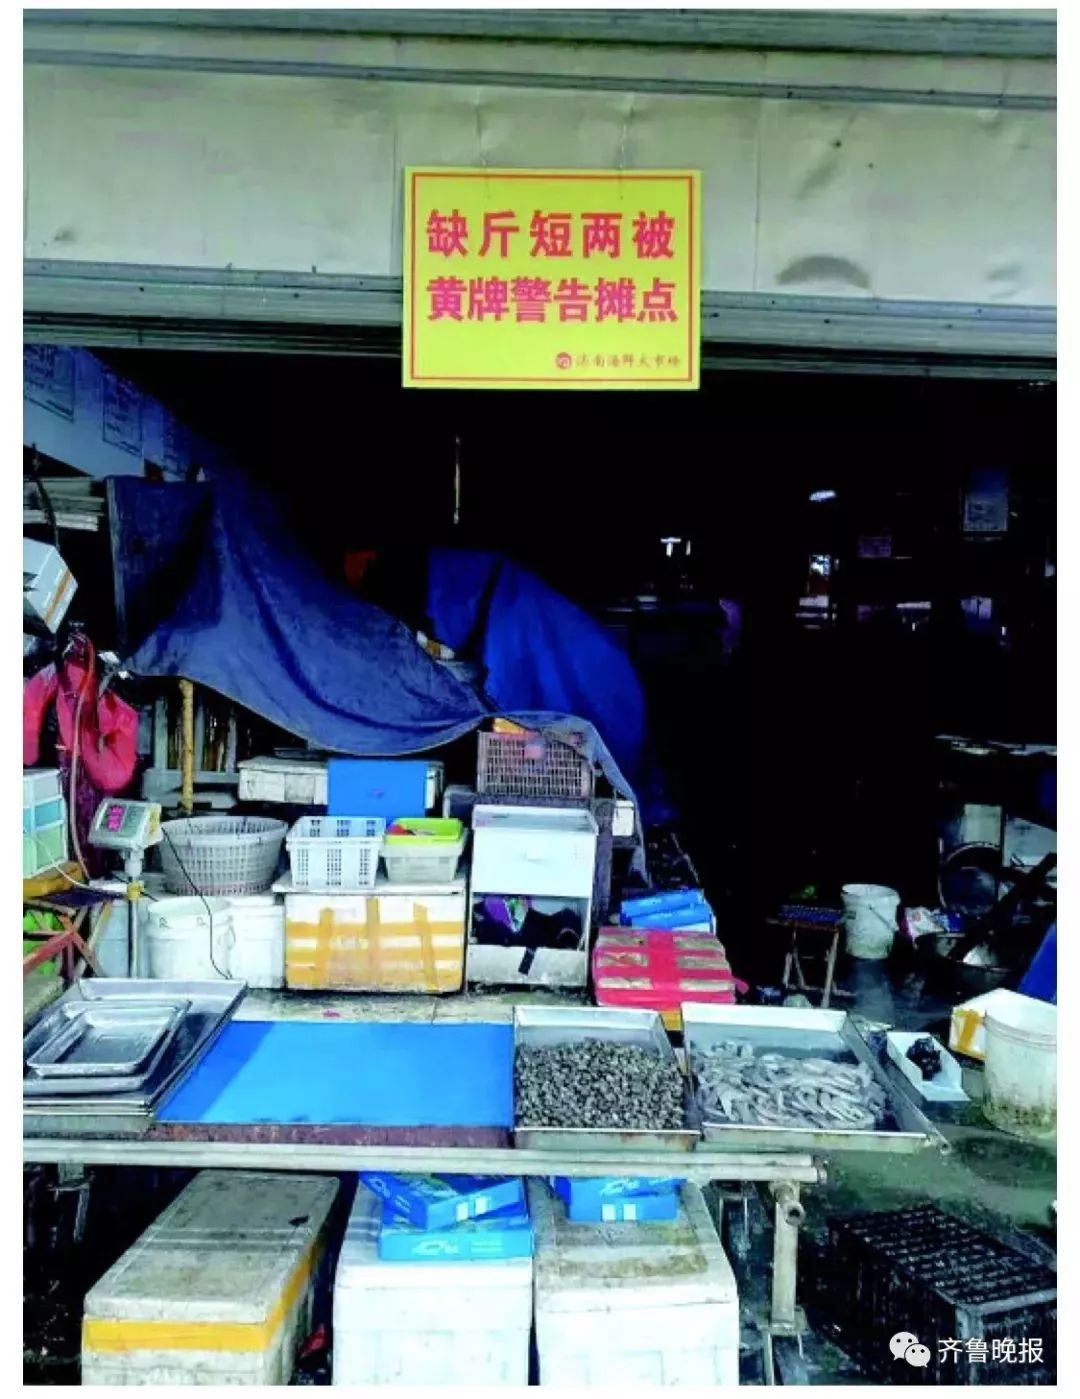 JBO竞博顶着“短斤缺两”黄牌警告 广州这家鲜鱼档“火了”(图5)